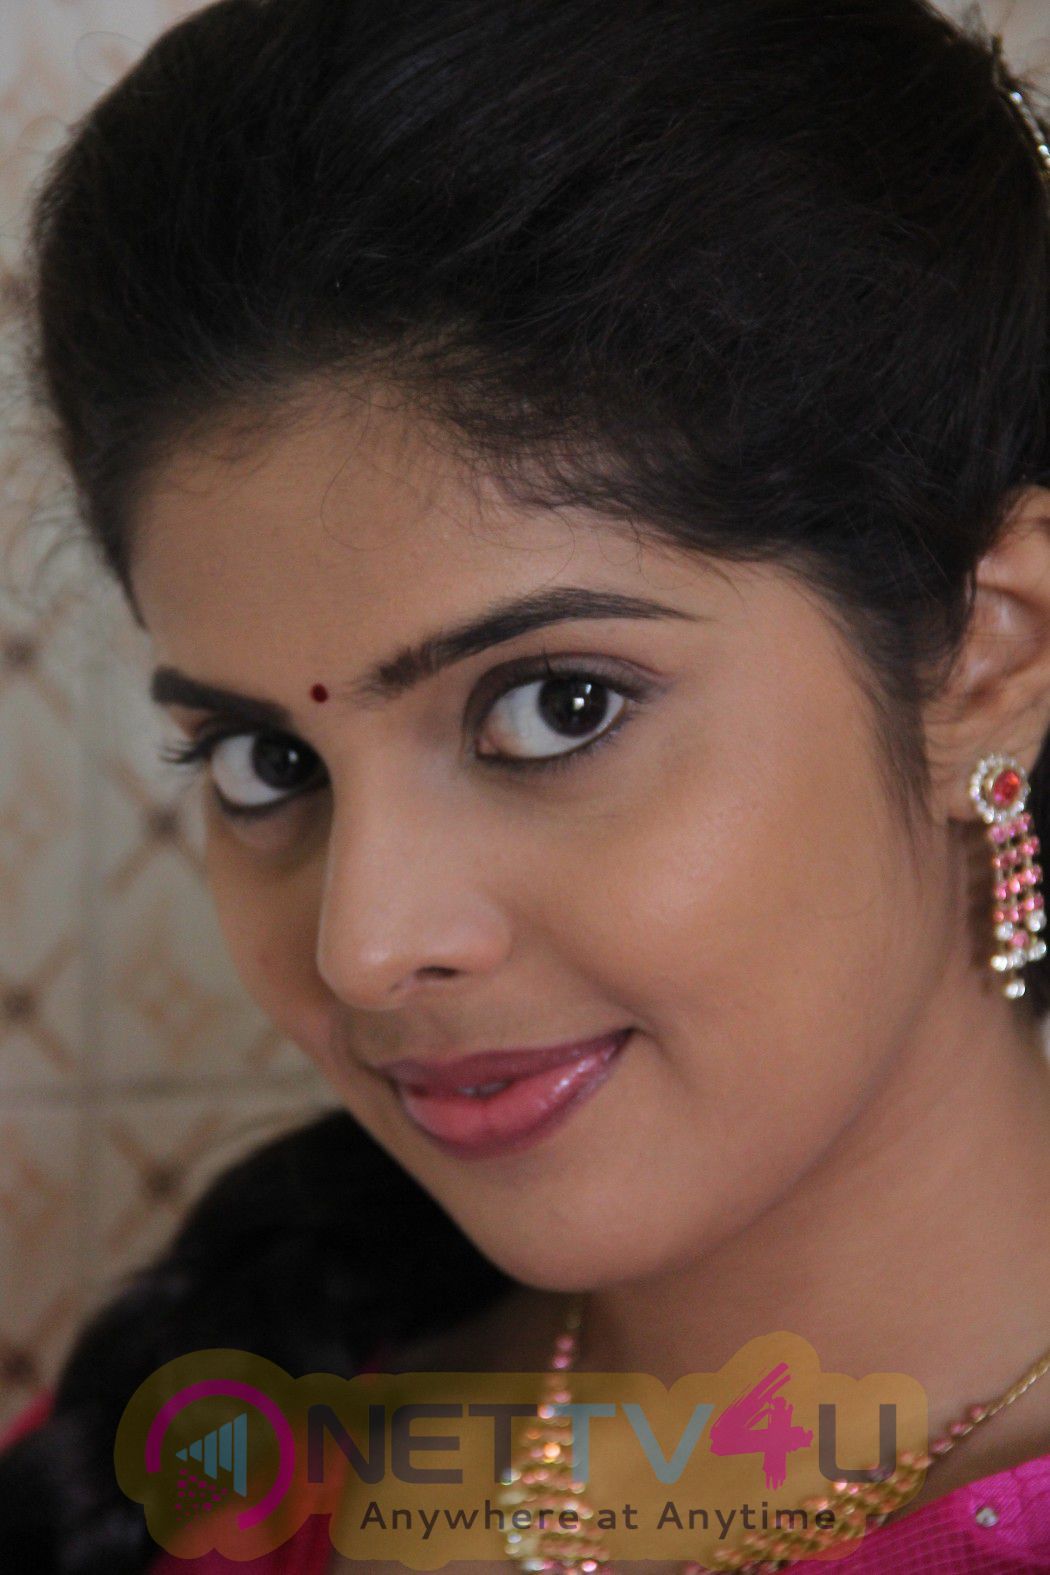 Tamil Actress Shravyah Hot Image. Galleries & HD Image